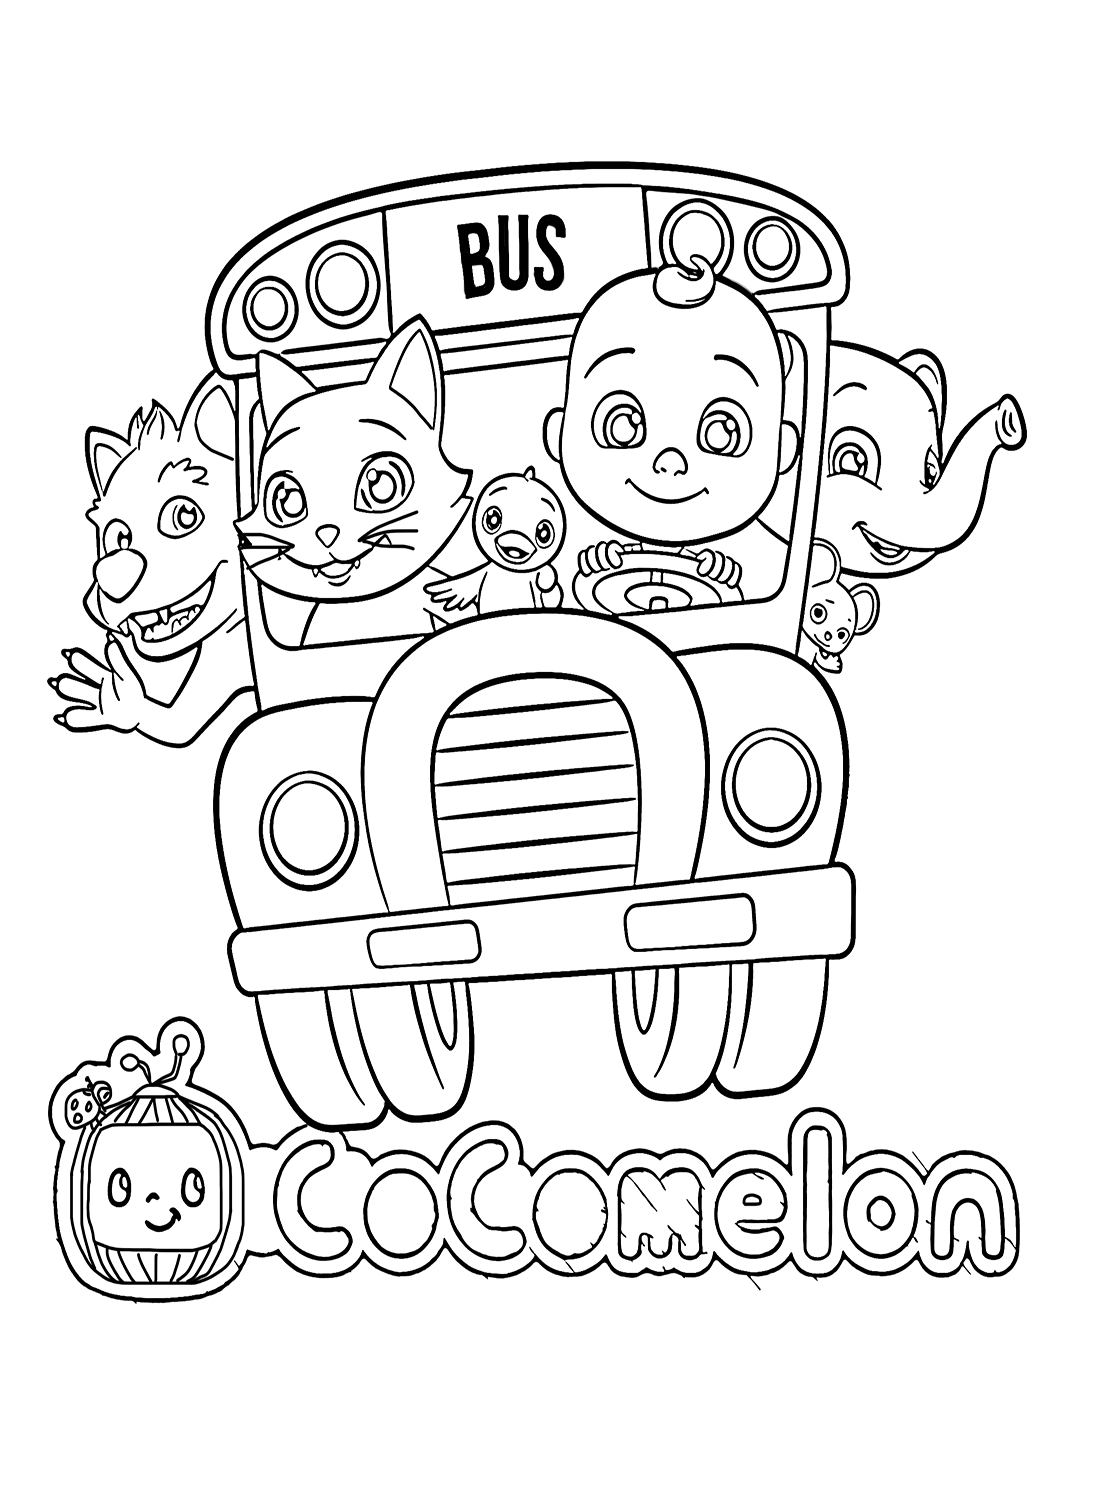 Cocomelon Bus Coloring Page